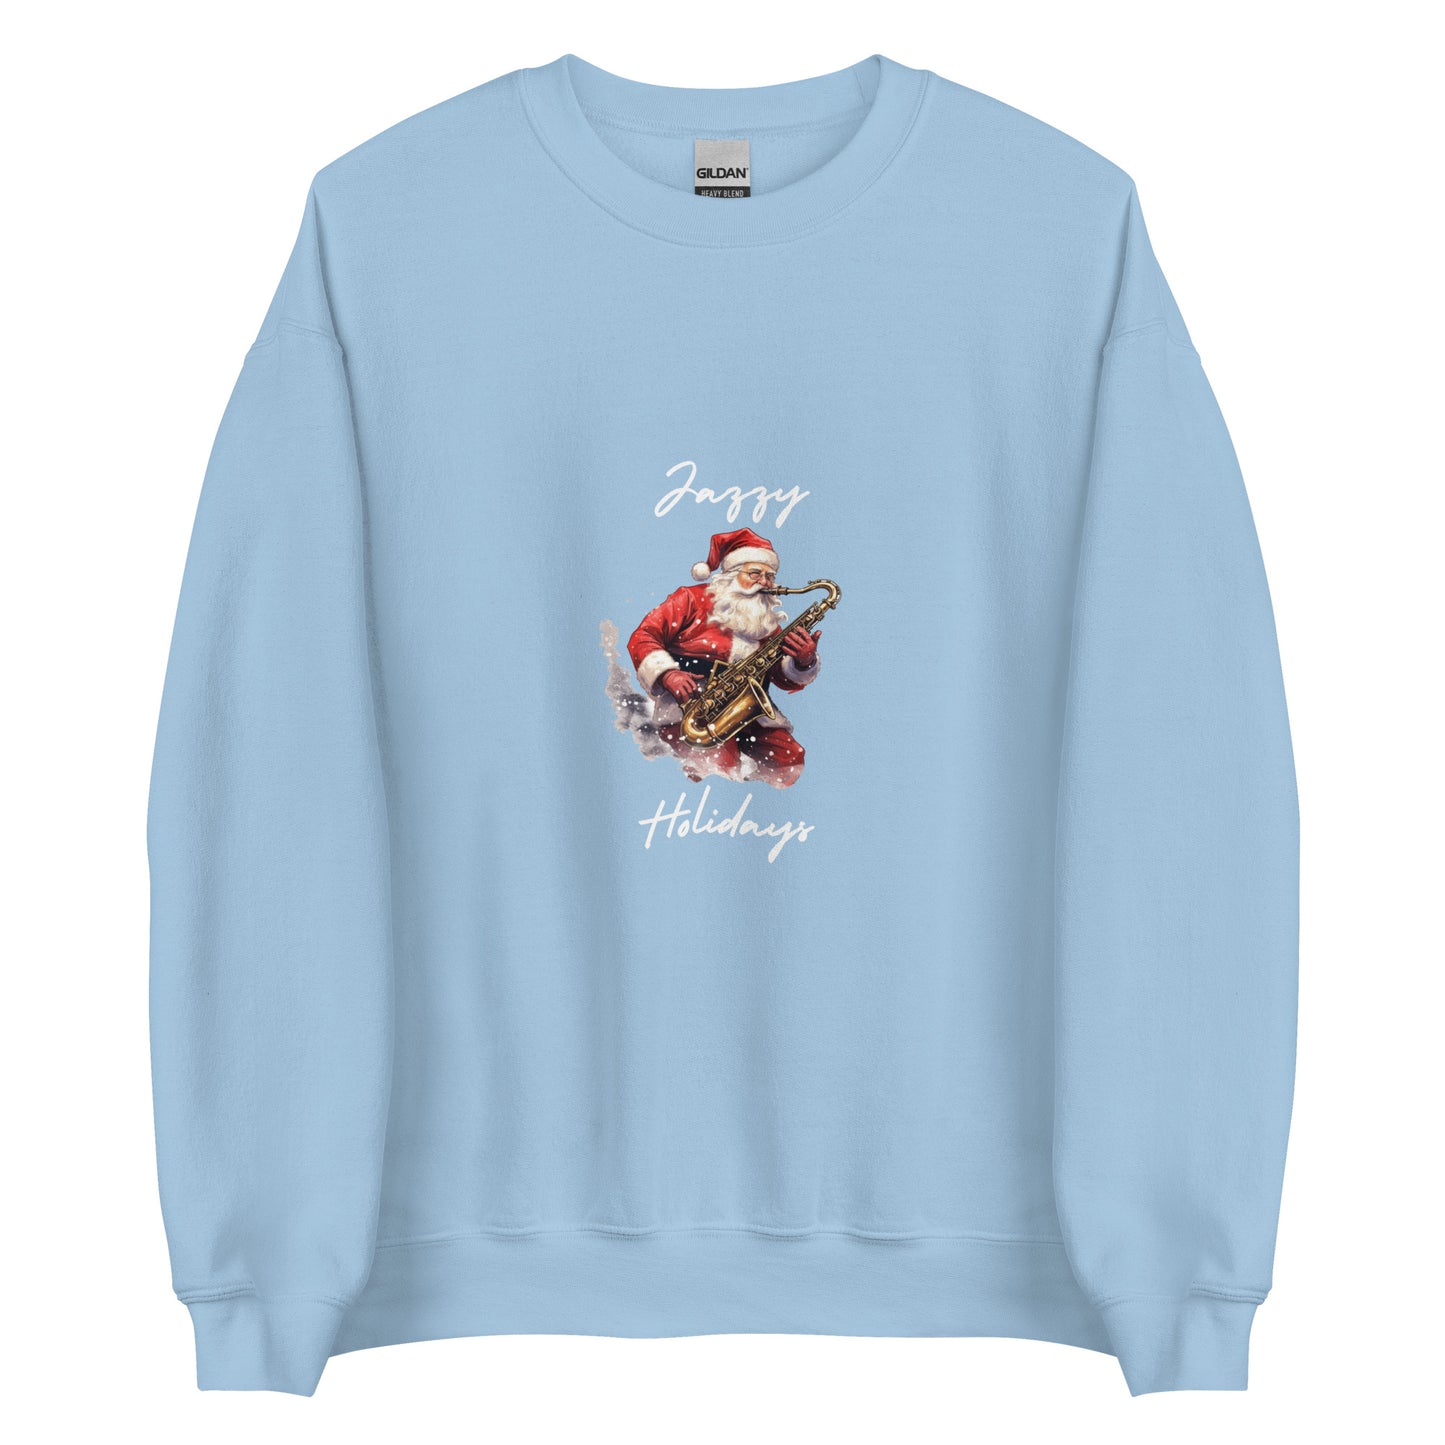 Santa Jazzy Holidays Unisex Sweatshirt